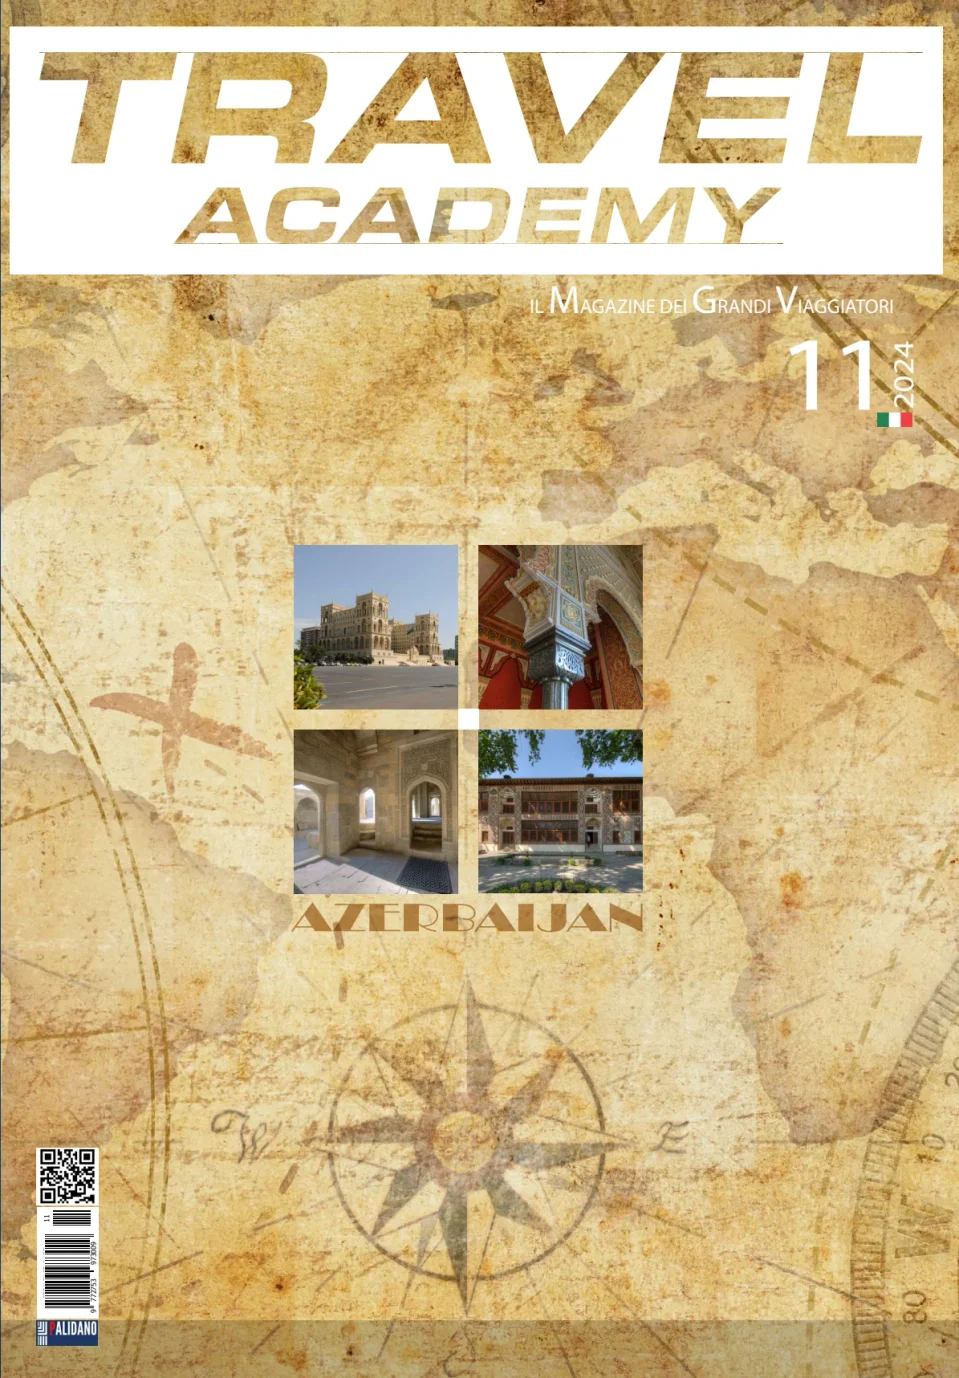 Travel Academy